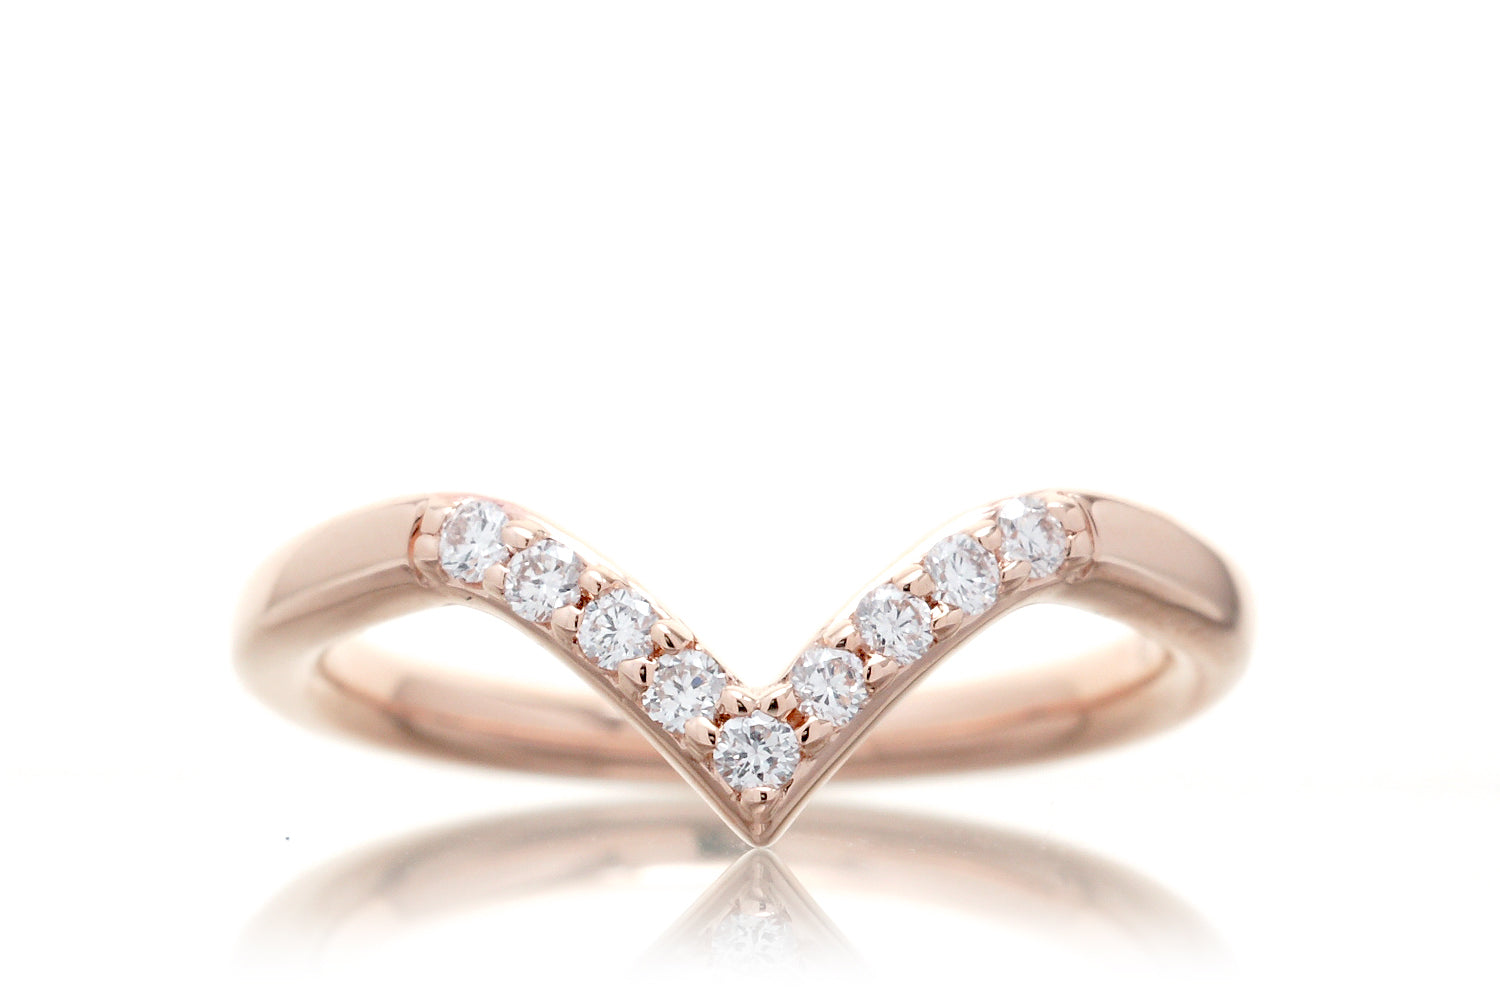 V shape diamond wedding band in rose gold